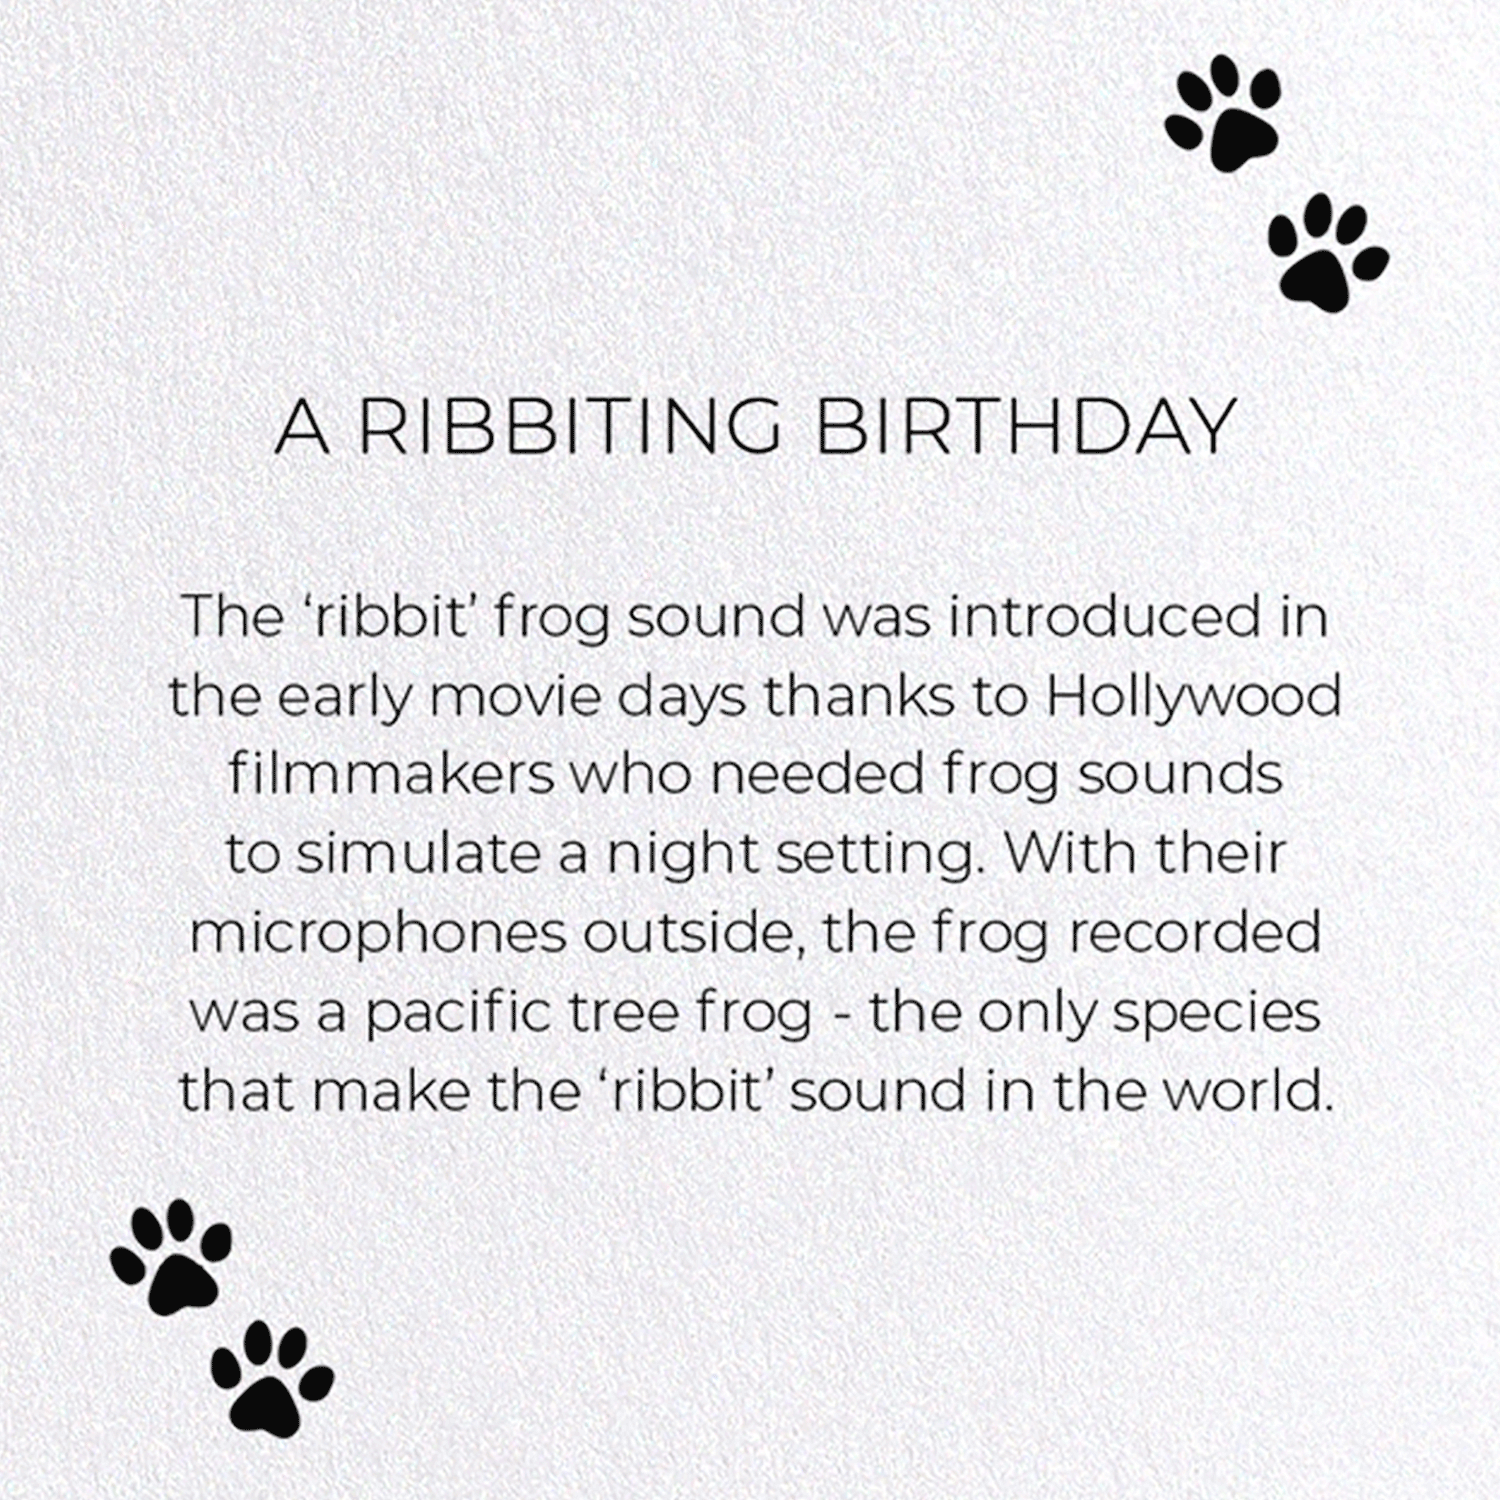 A RIBBITING BIRTHDAY: Funny Animal Greeting Card